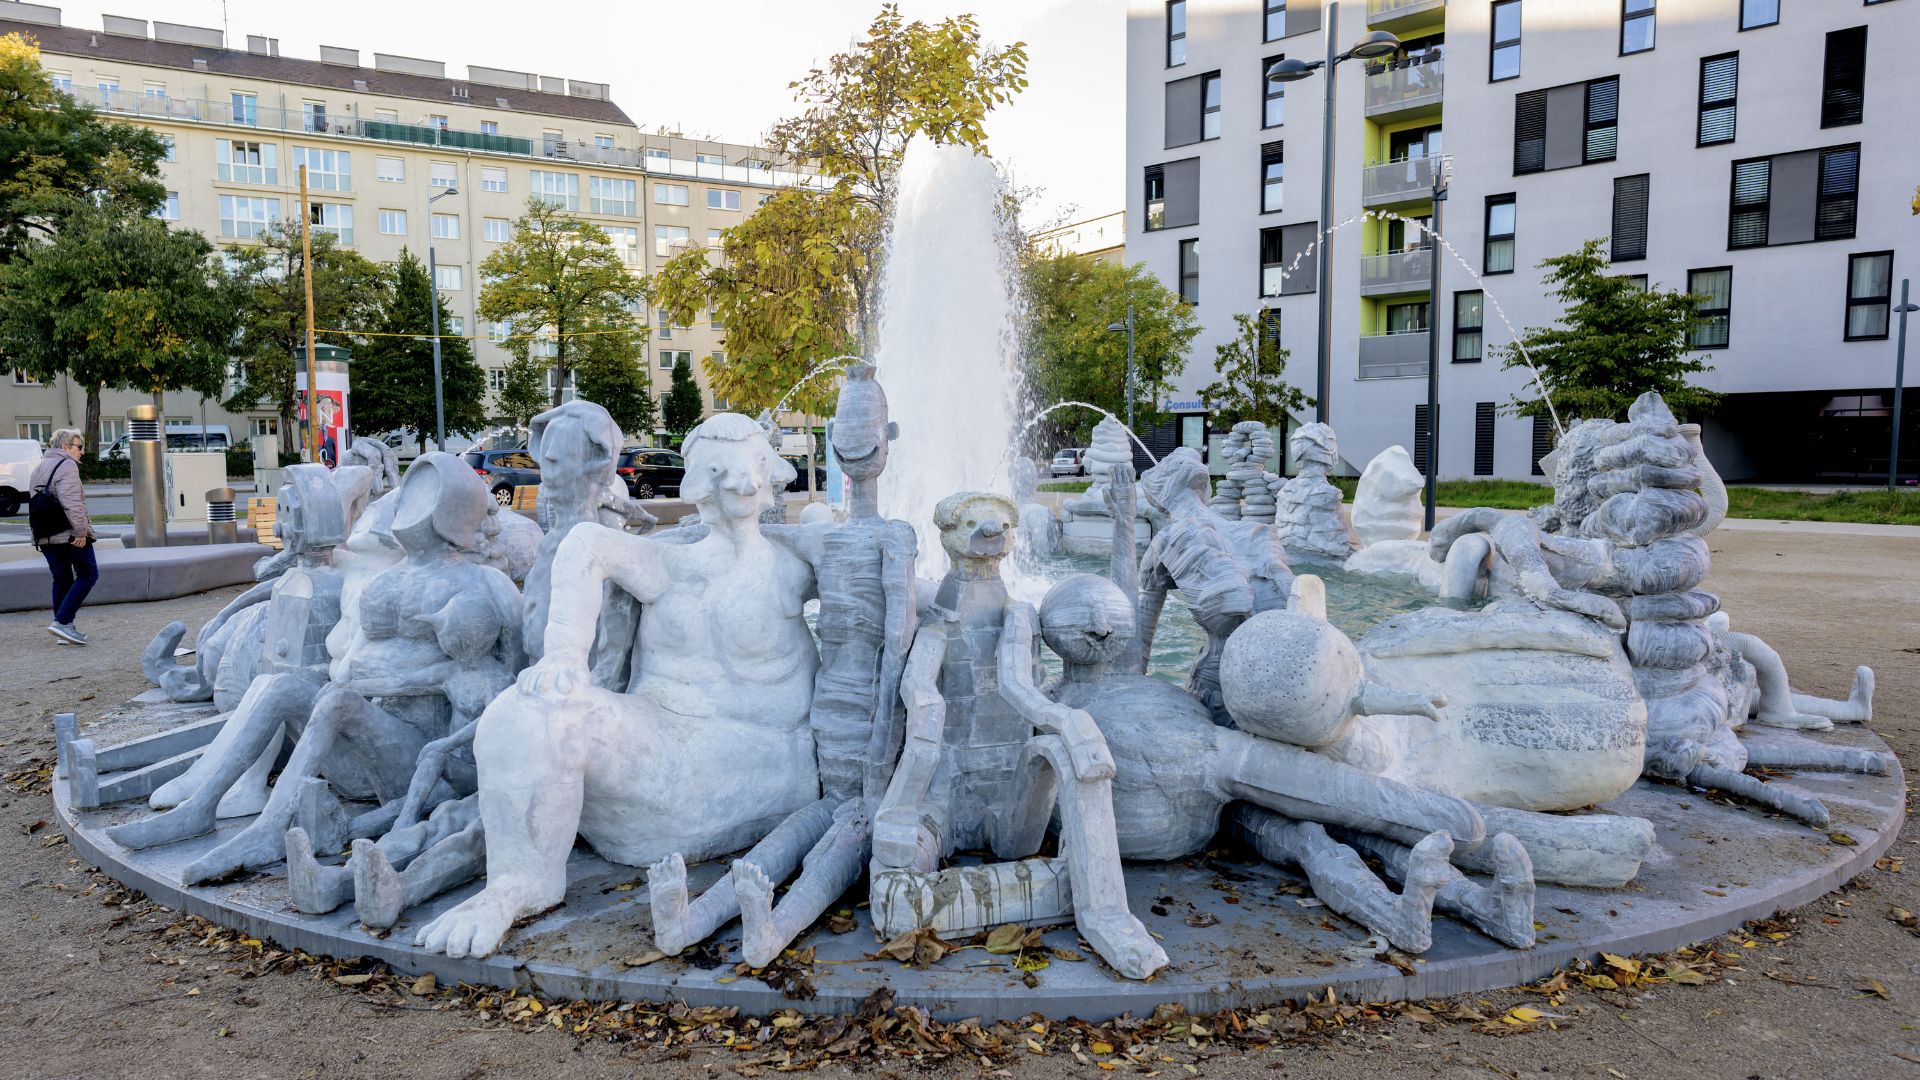 Viennese artist group Gelitin's sculpture is proving controversial. /Joe Klamar/AFP